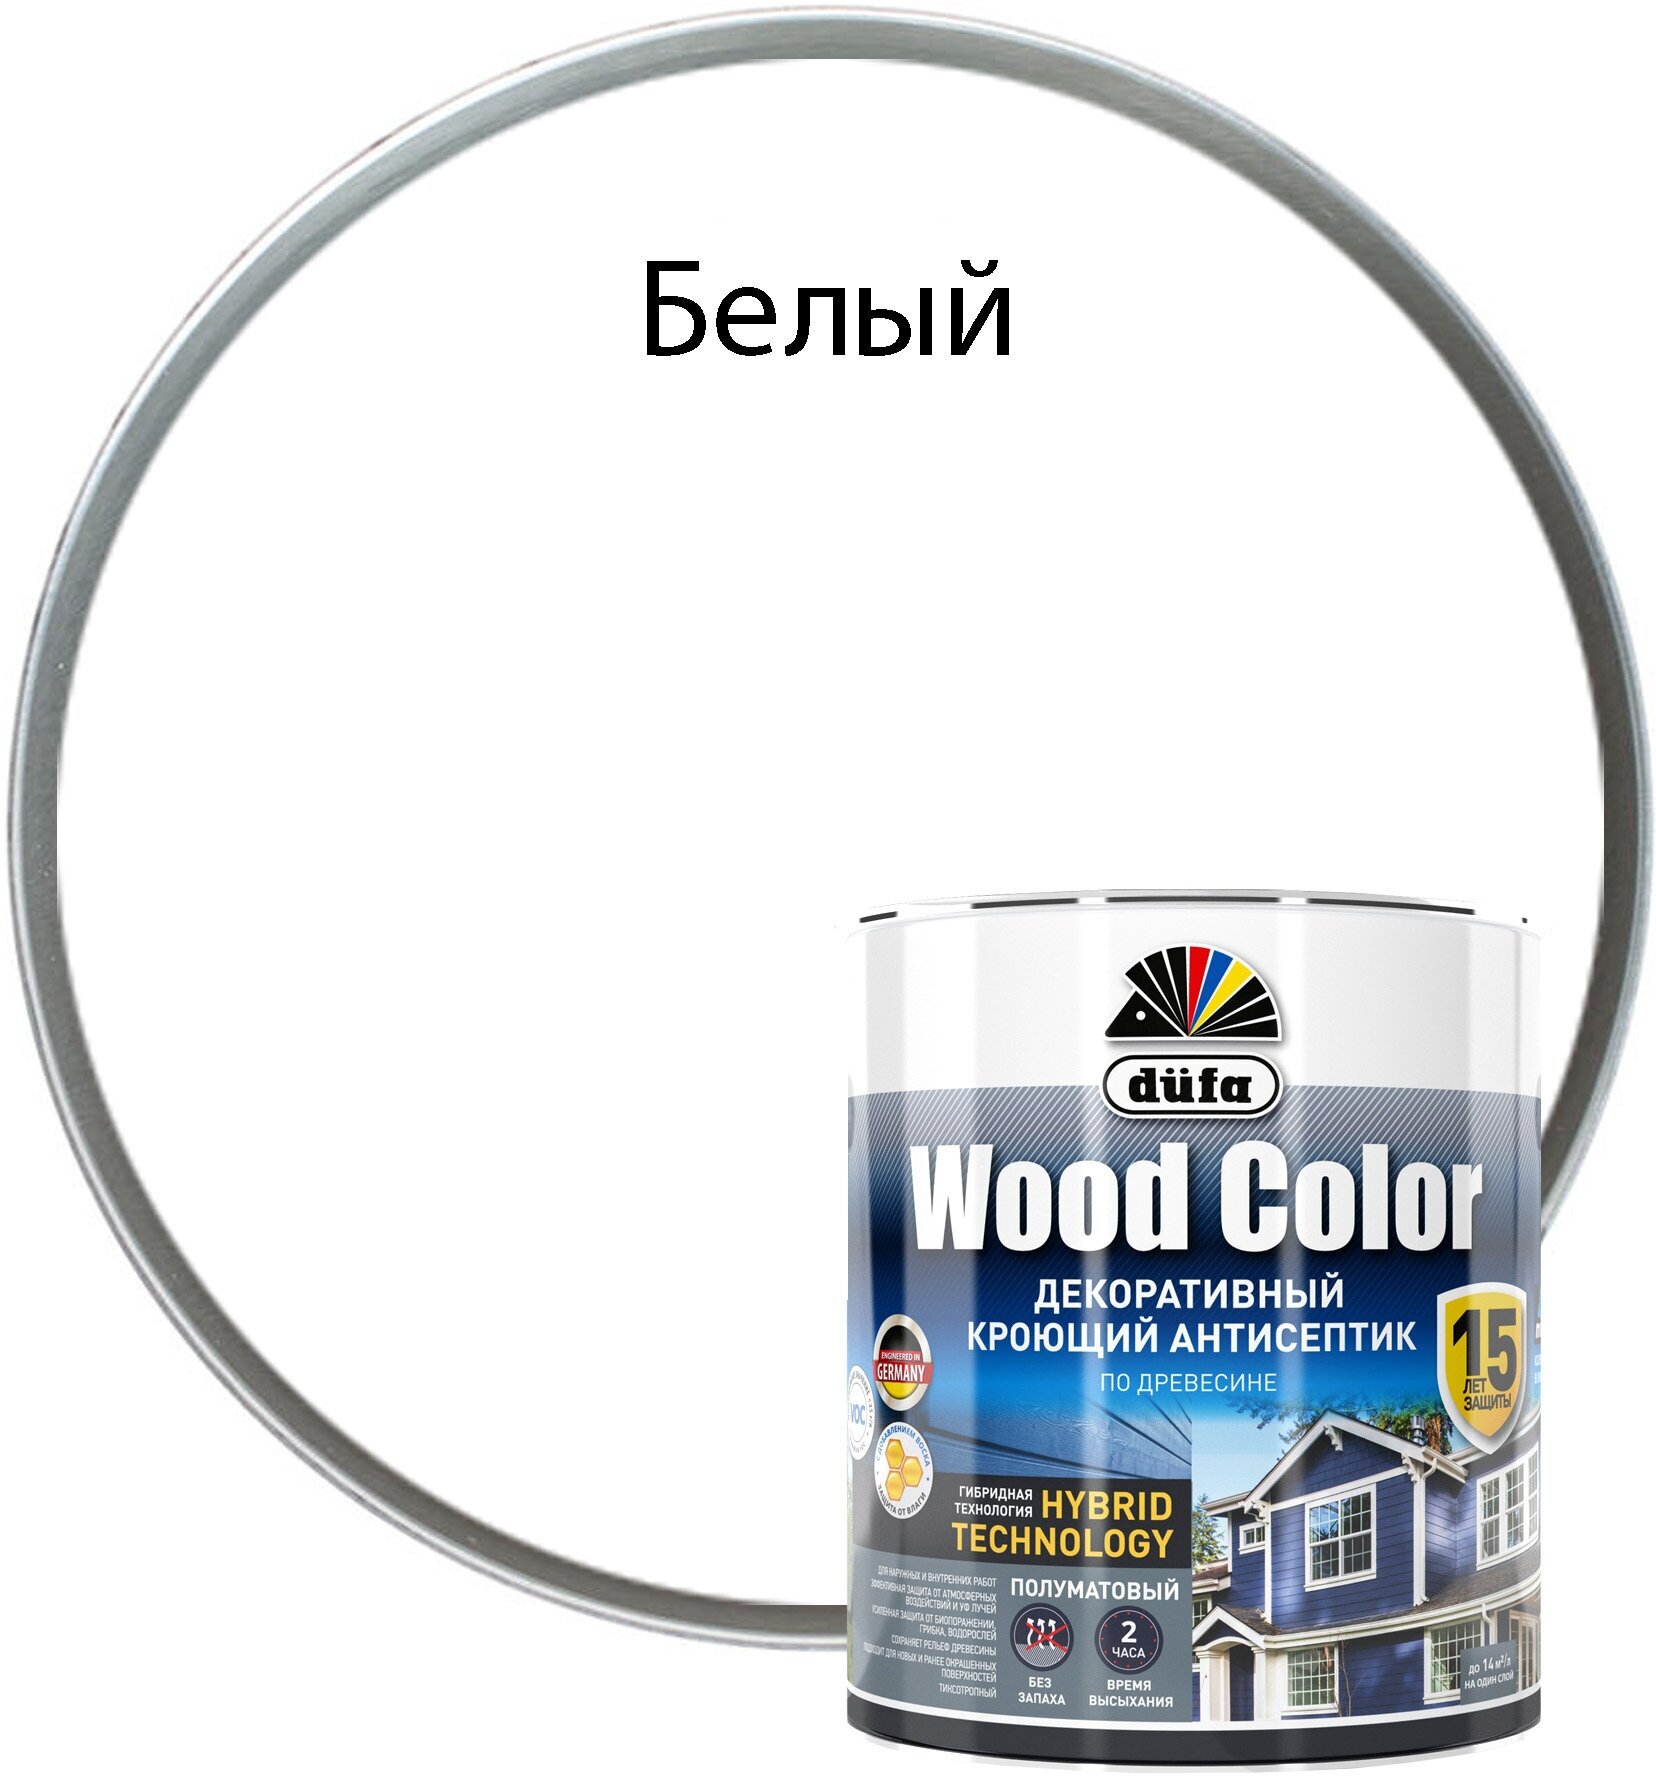 Декоративный кроющий антисептик Dufa Wood Color база 1 0,9 л